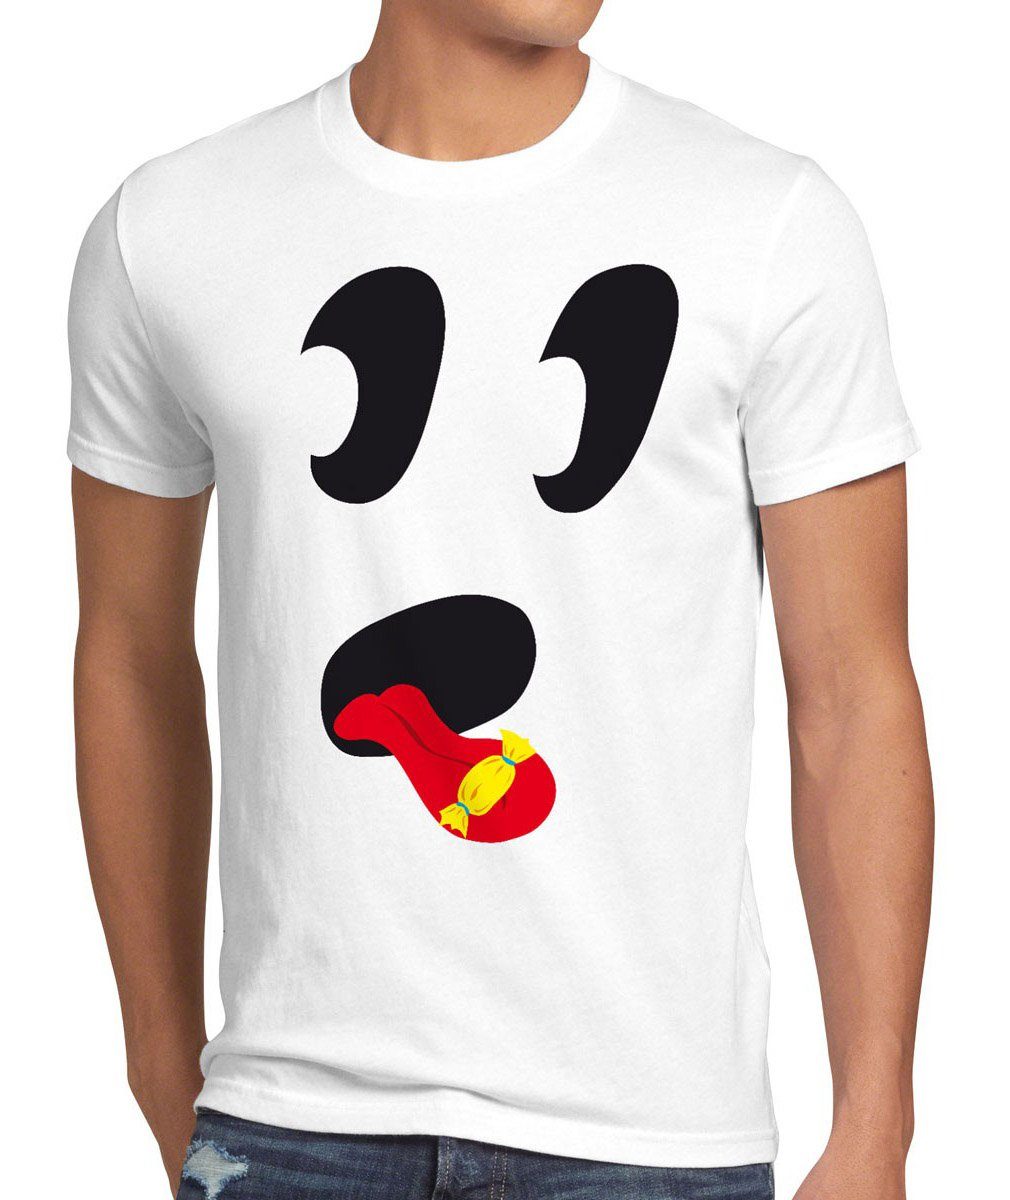 Gag style3 Geist Halloween Süßer Herren Kopf Fun weiß Party T-Shirt Gesicht Print-Shirt Fasching Kostüm